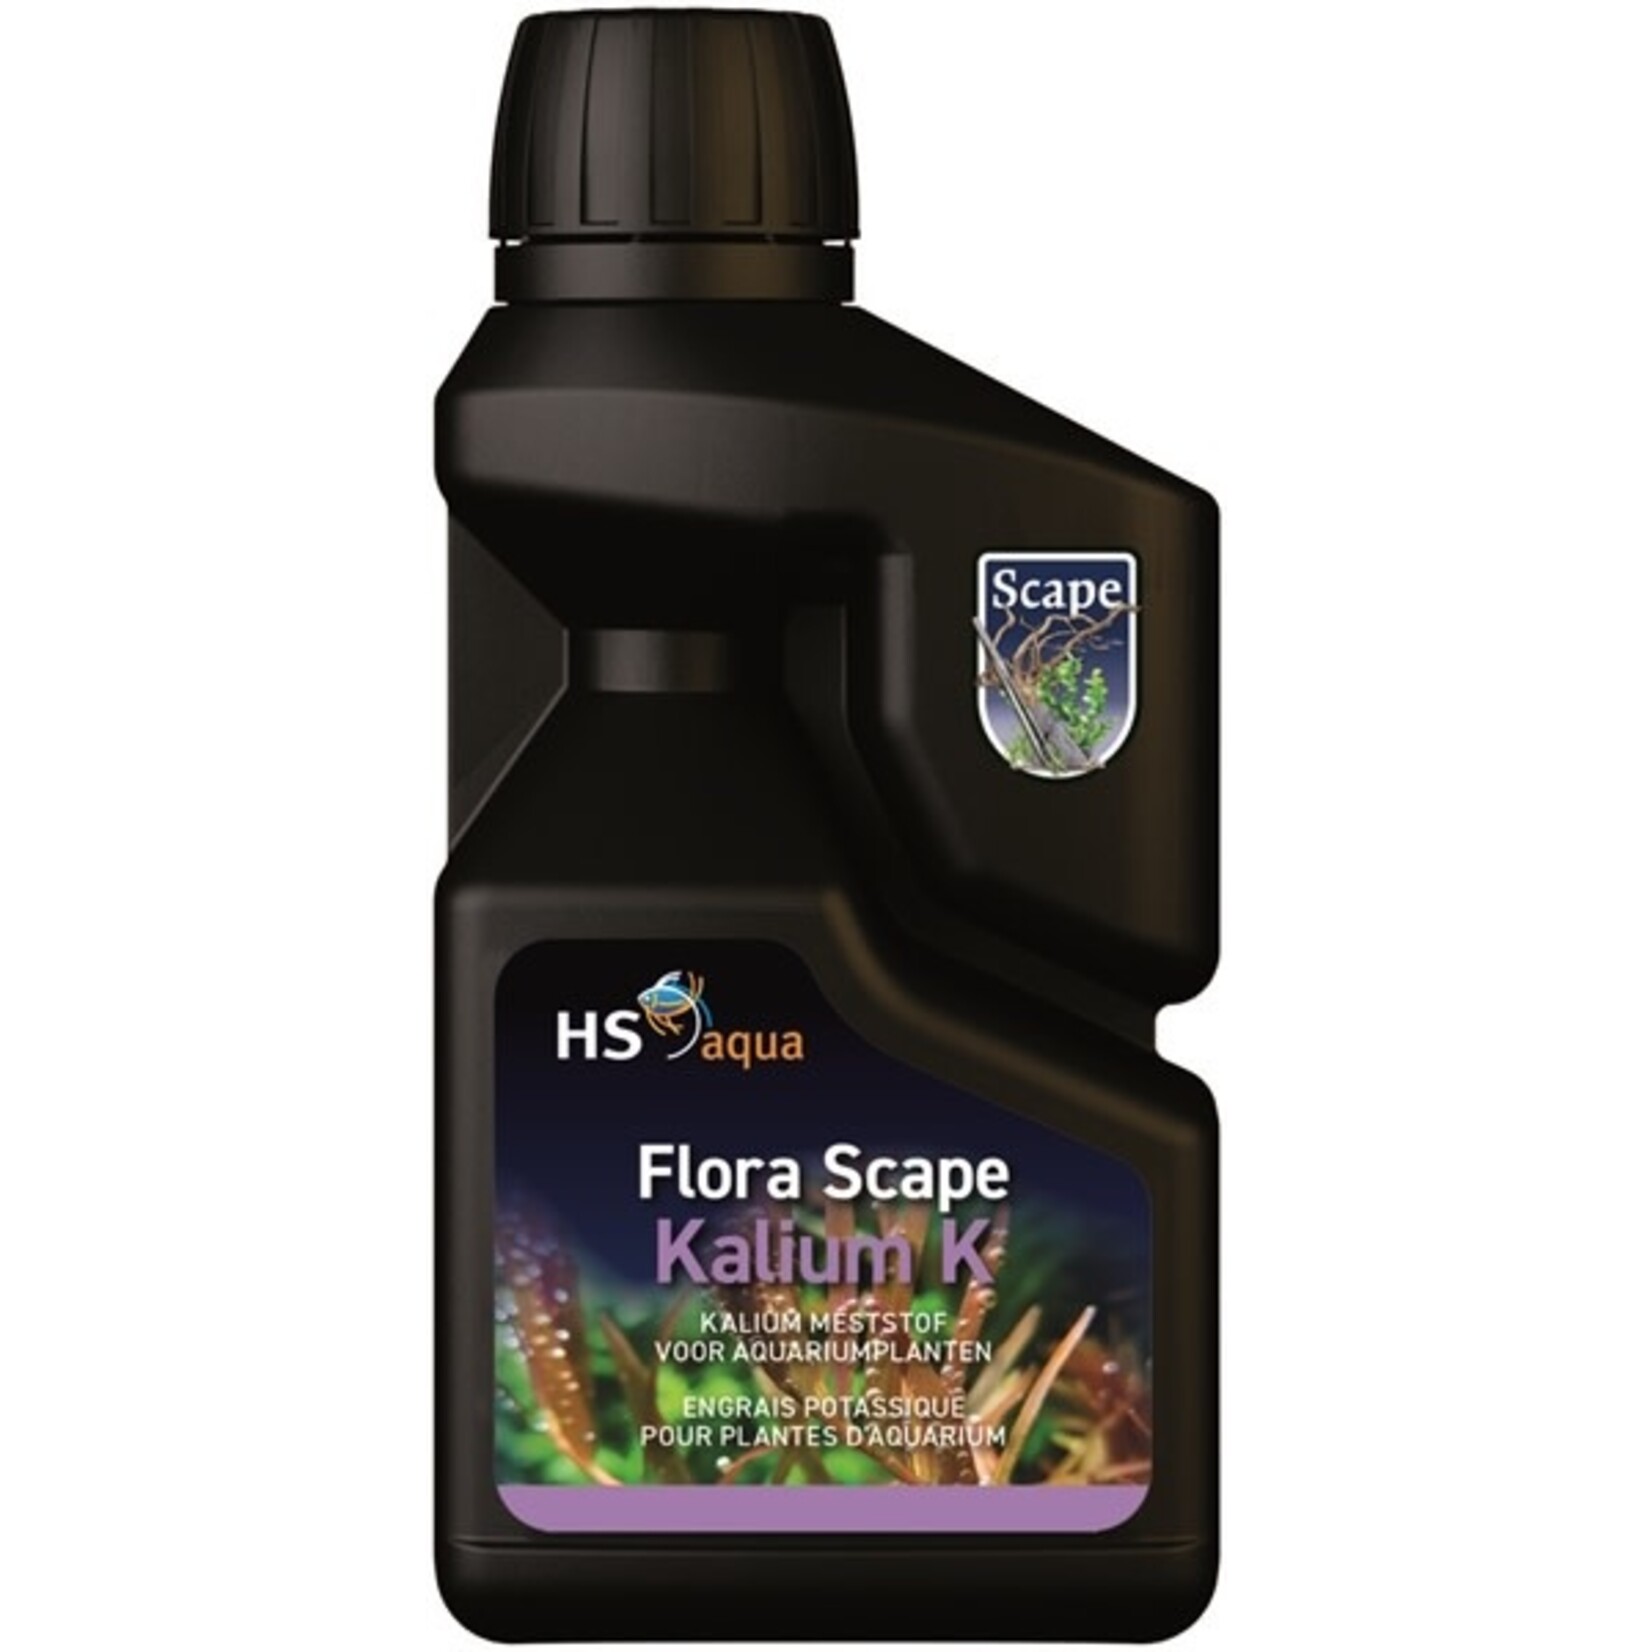 HS Aqua Flora scape kalium k 250 ml